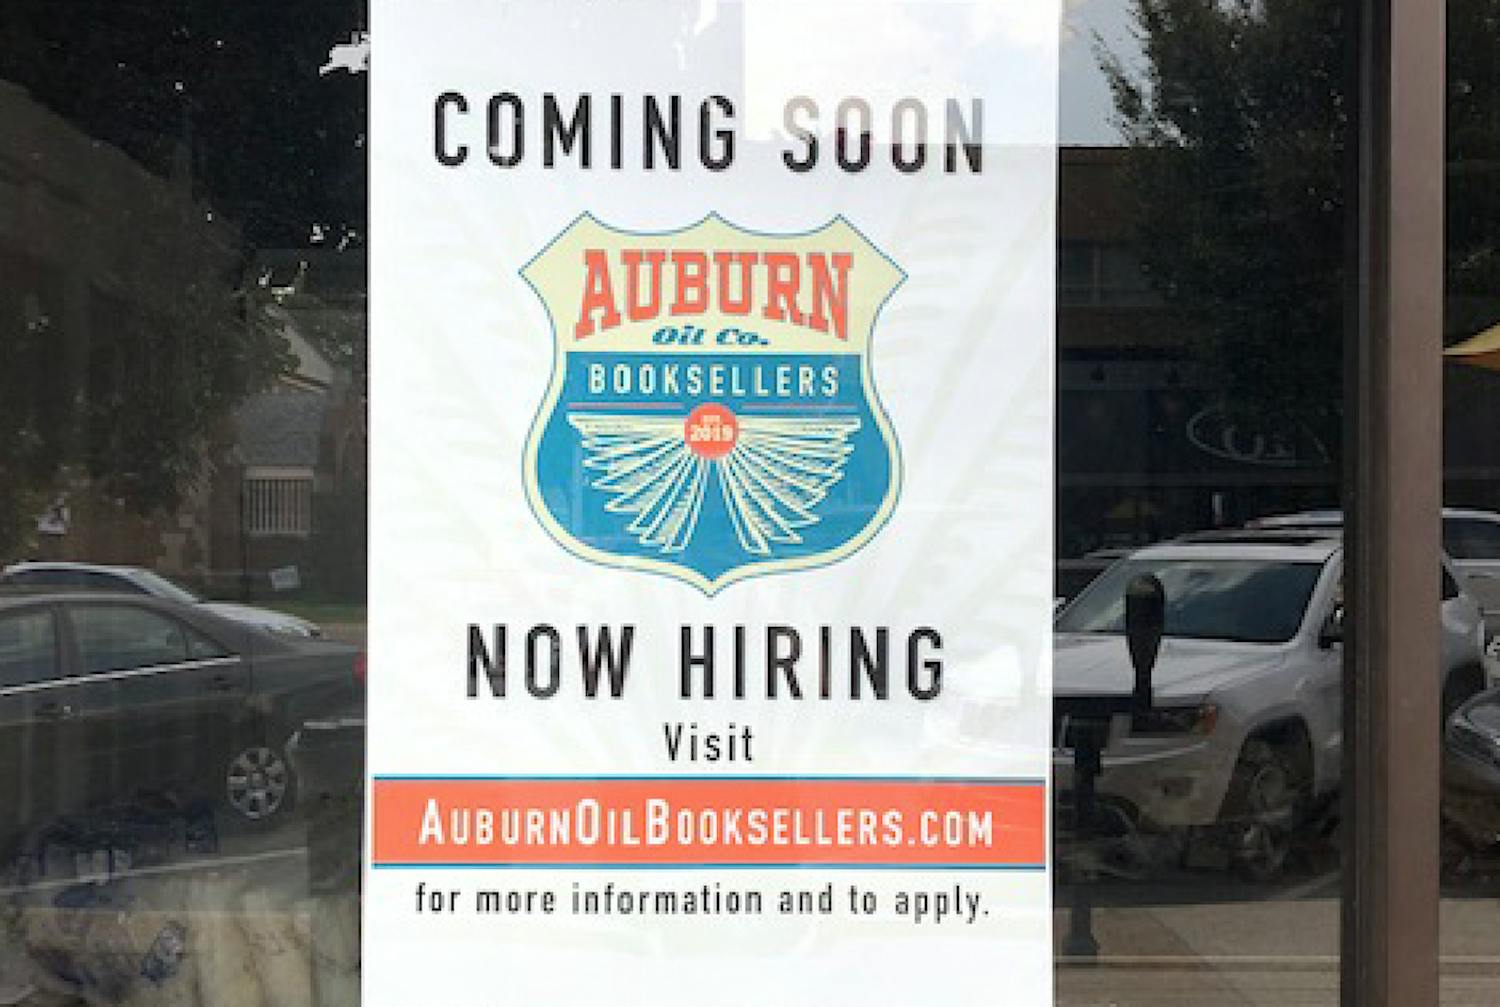 Auburn Oil Co. Booksellers sign